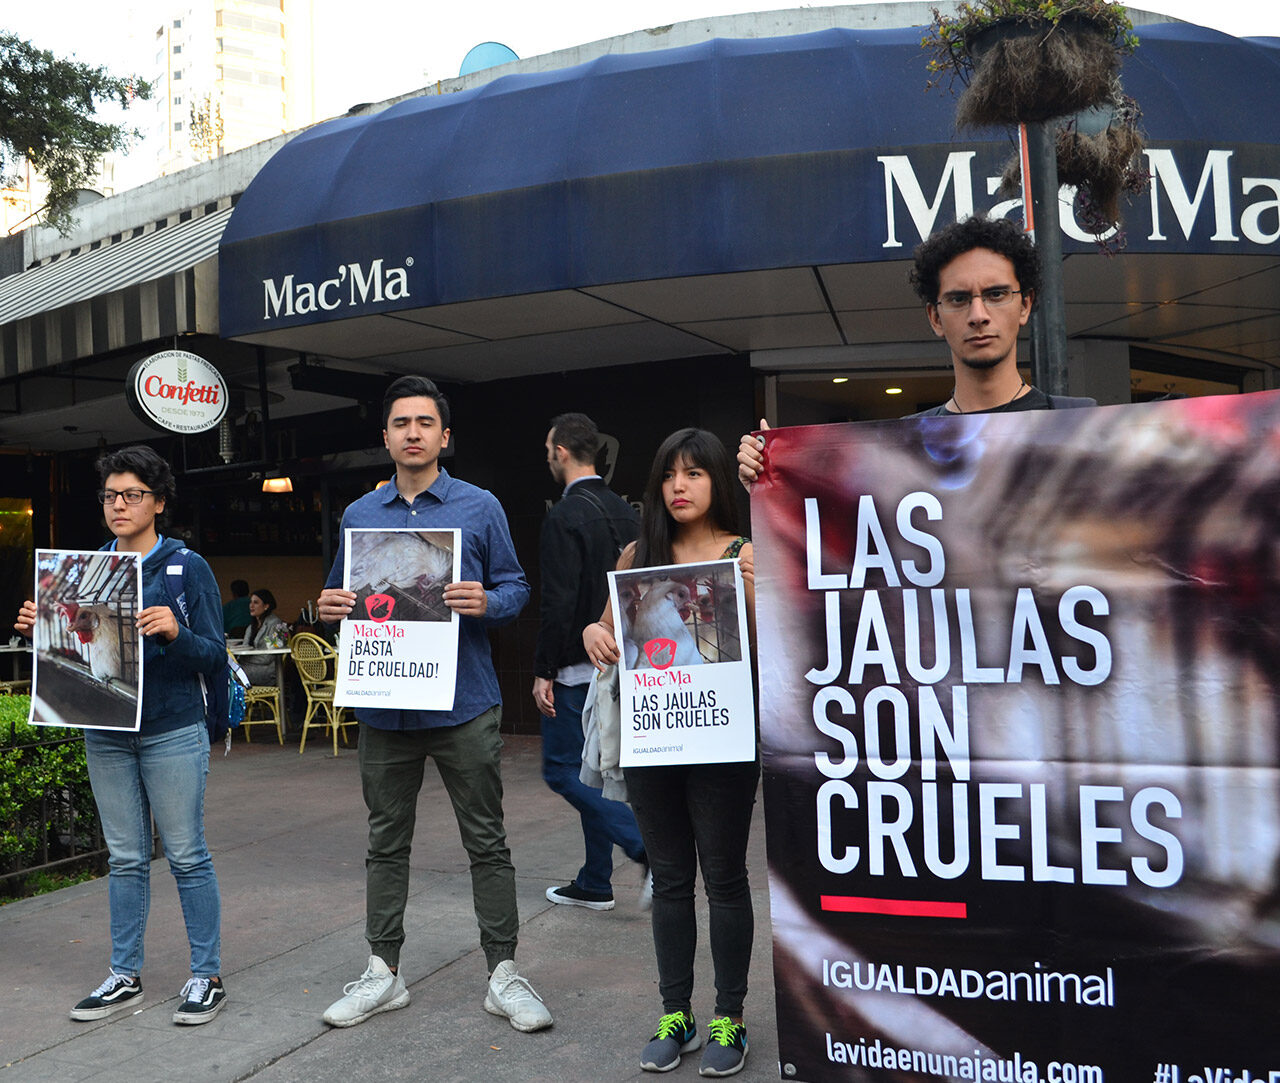 kampagne gegen käfighaltung in mexiko